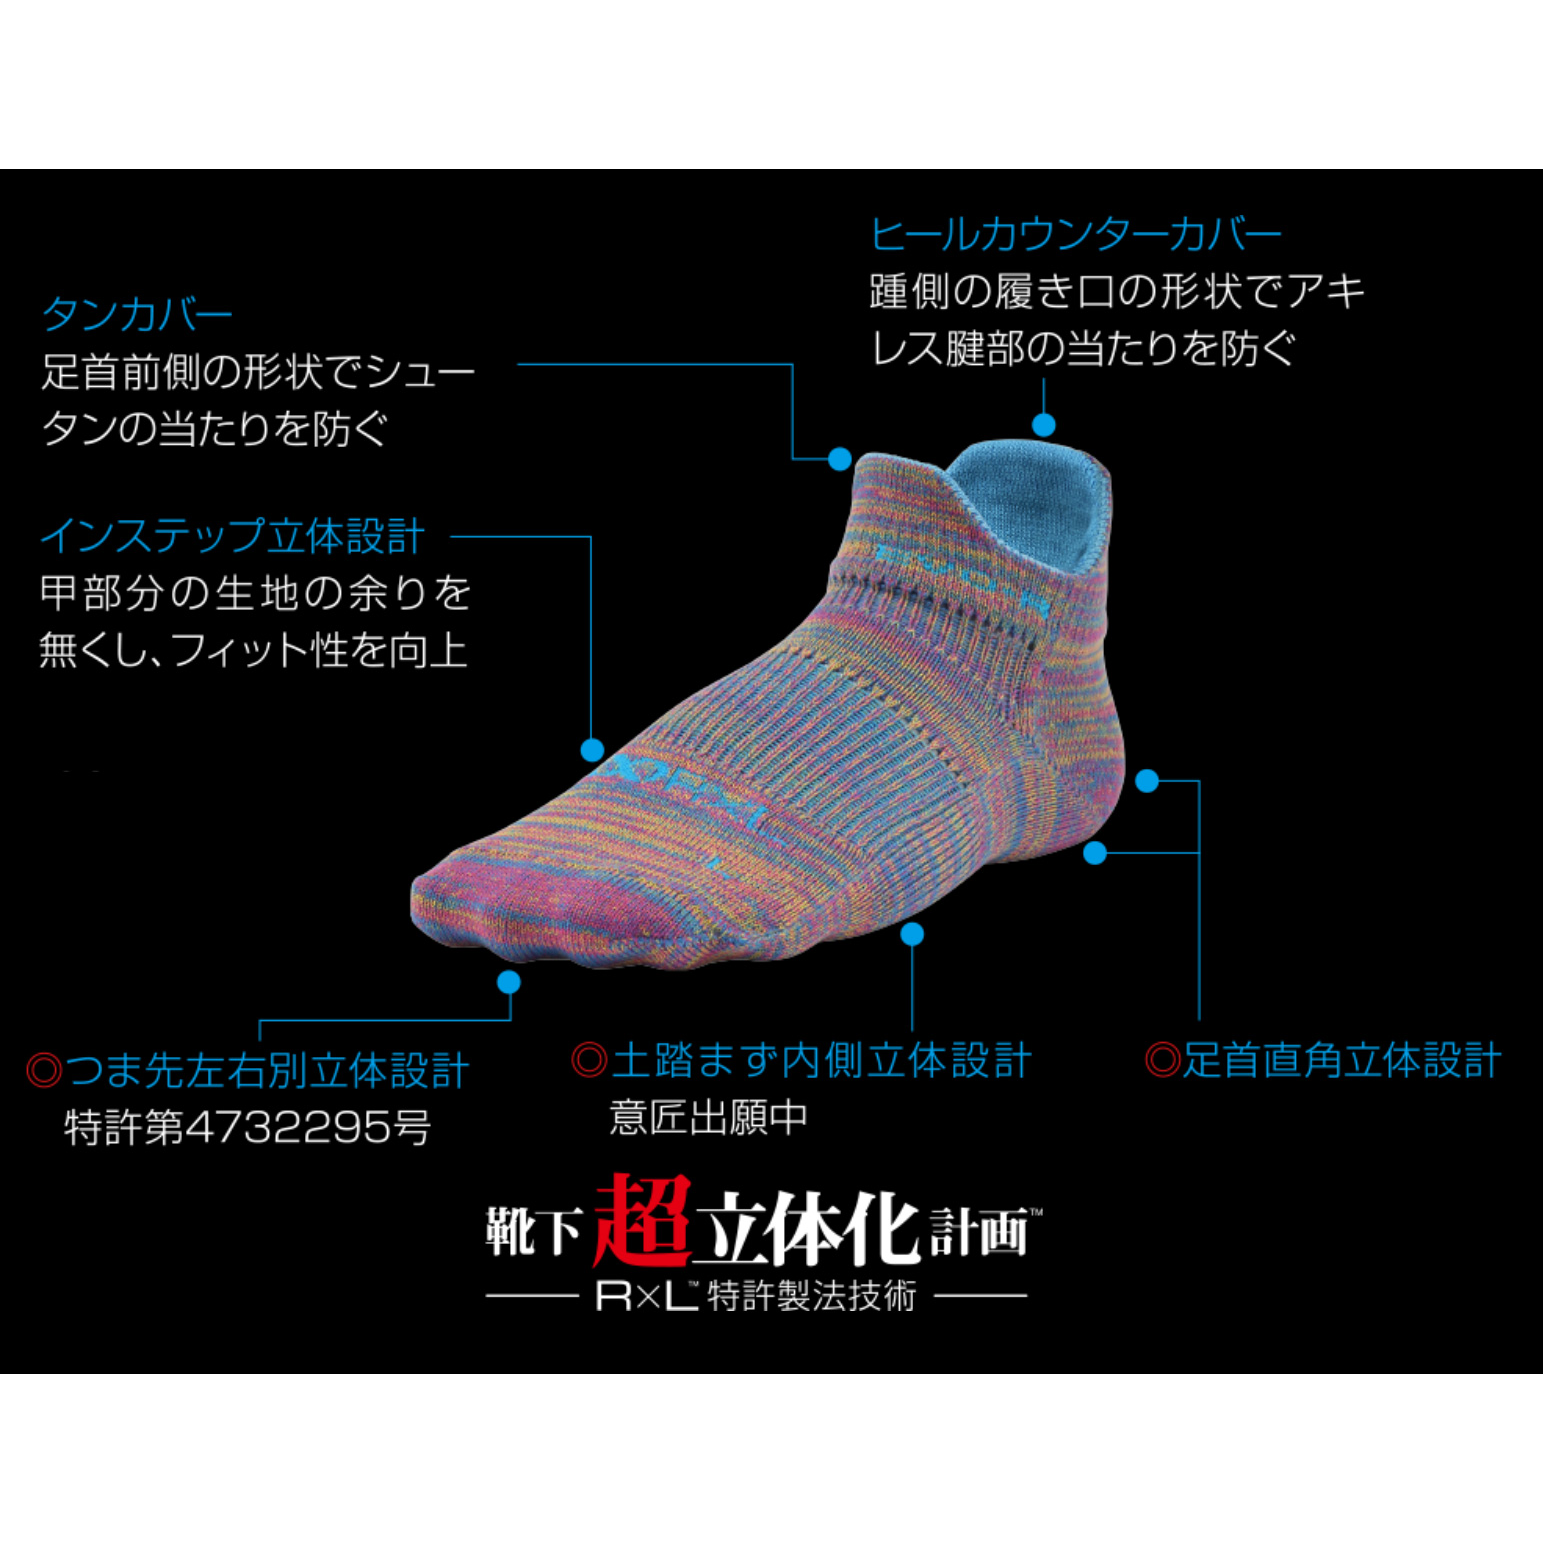 R×L EVO-R ランニングソックス 靴下 レディース メンズ(ラウンド) RNS1001 | R×L(アールエル) 公式 Online ショップ